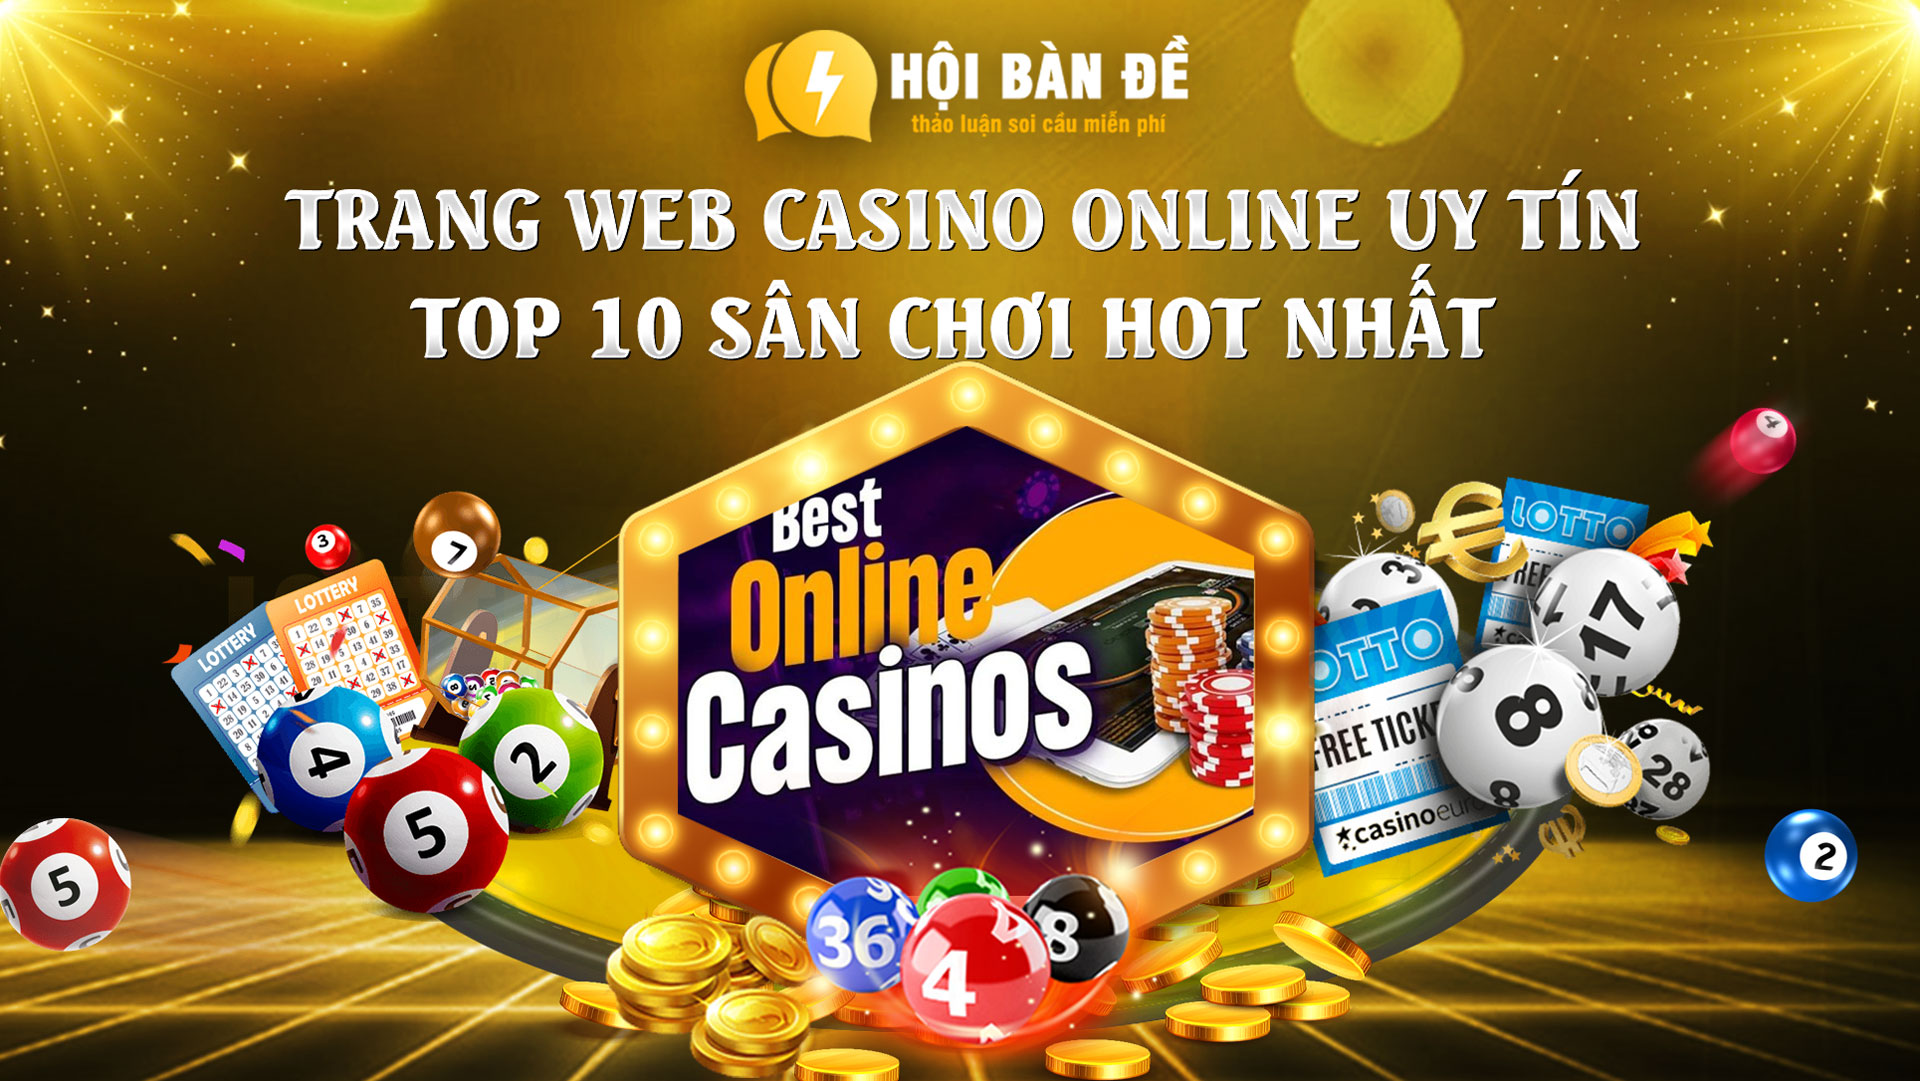 Trang Web Casino Online Uy Tin